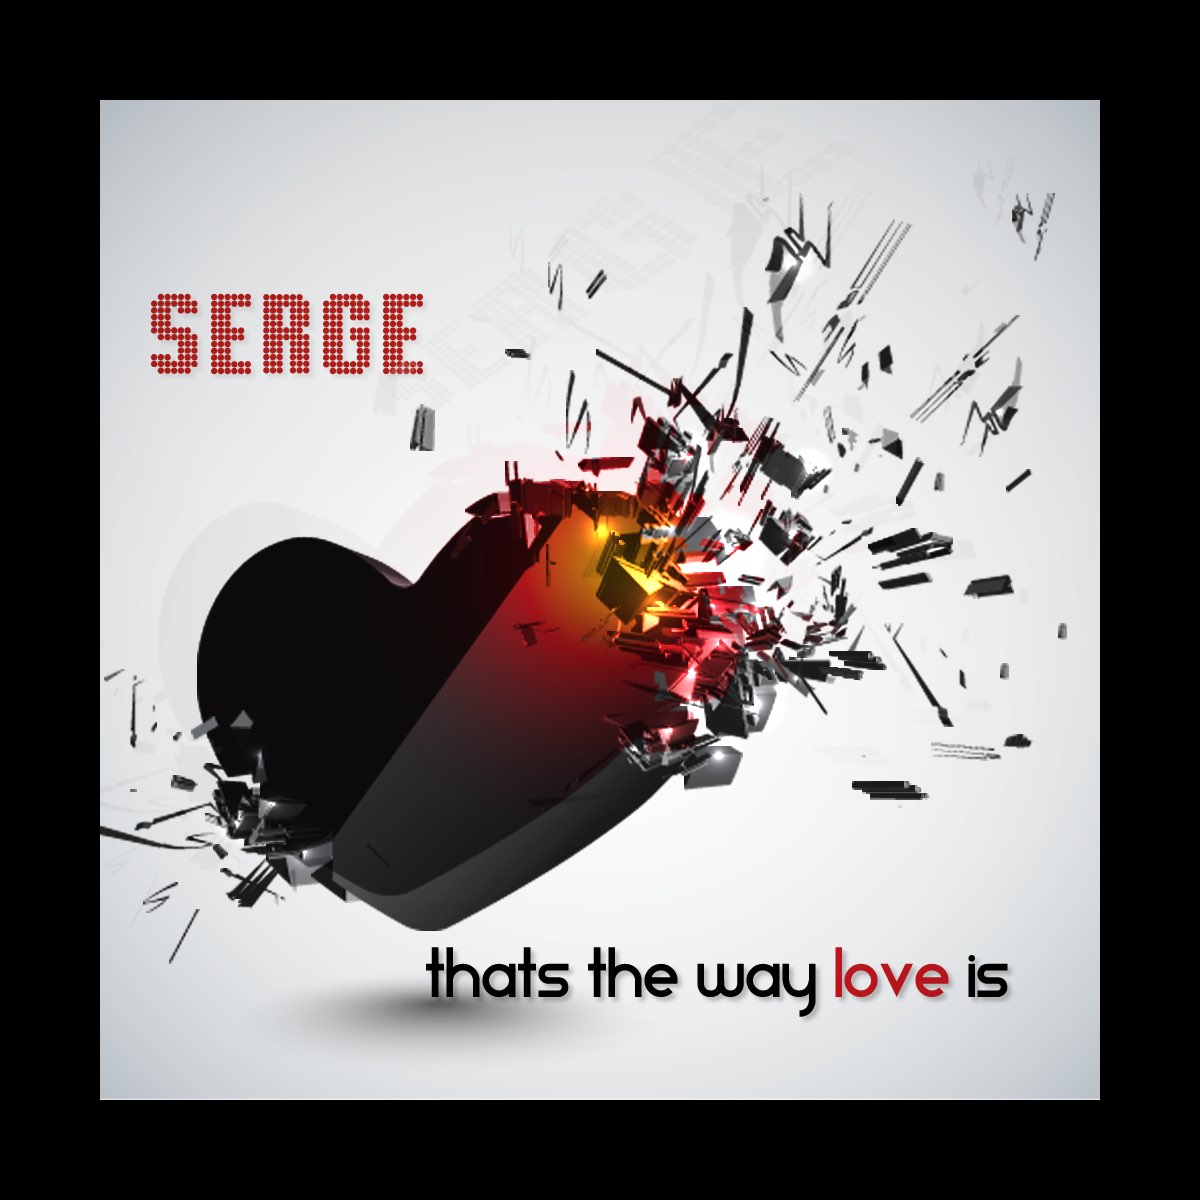 Serge песня. Музыка Серж. A way to Love. Thats the Music.